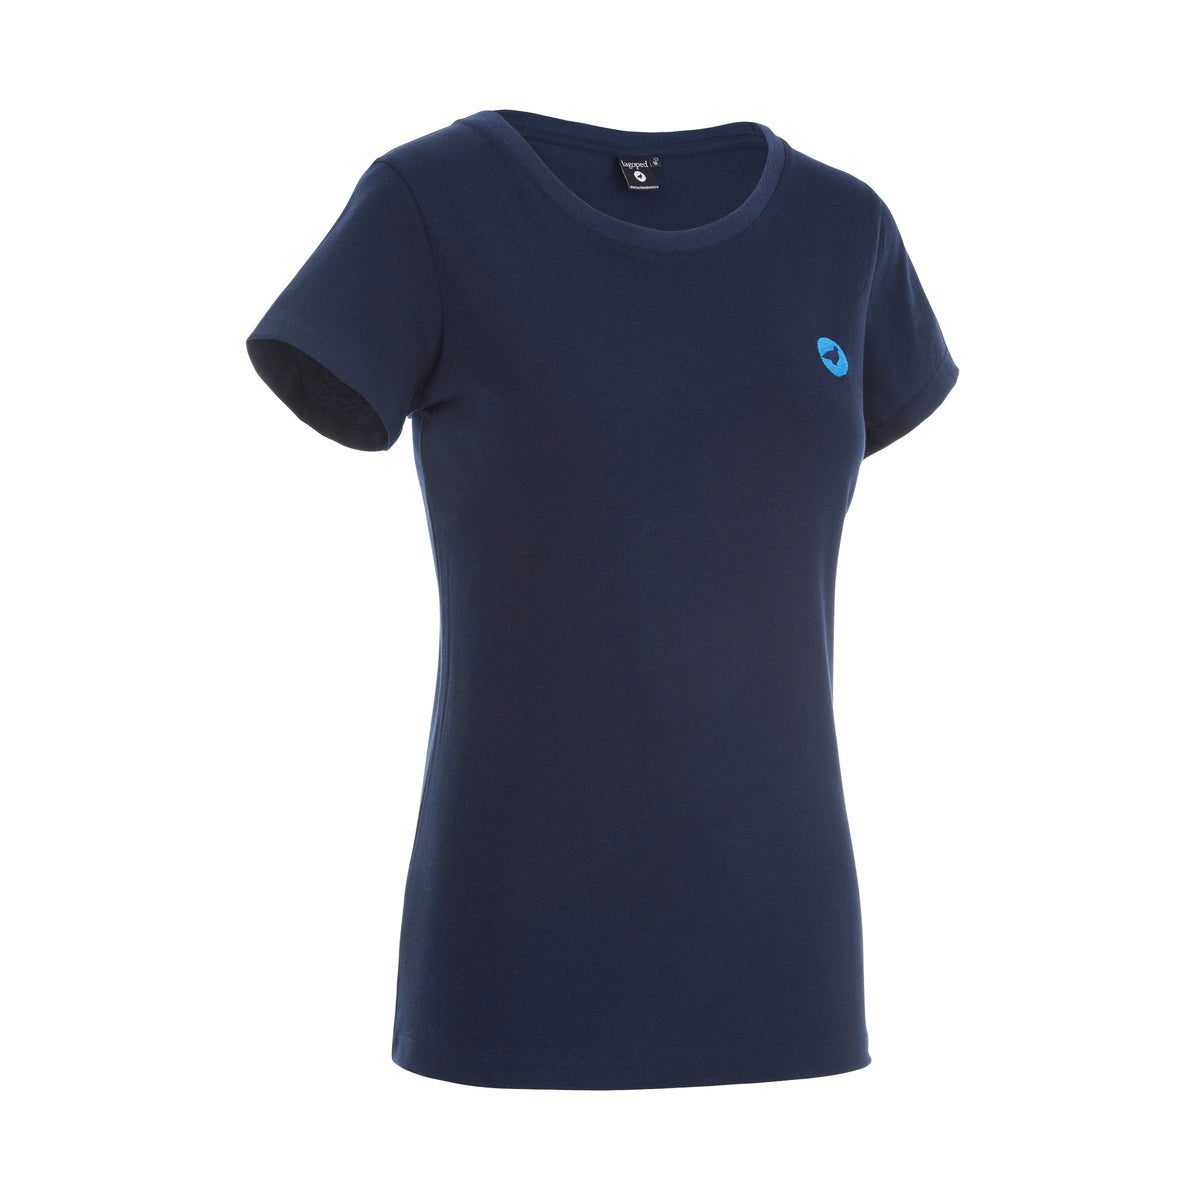 Lagoped Teerec - T-shirt - Women's